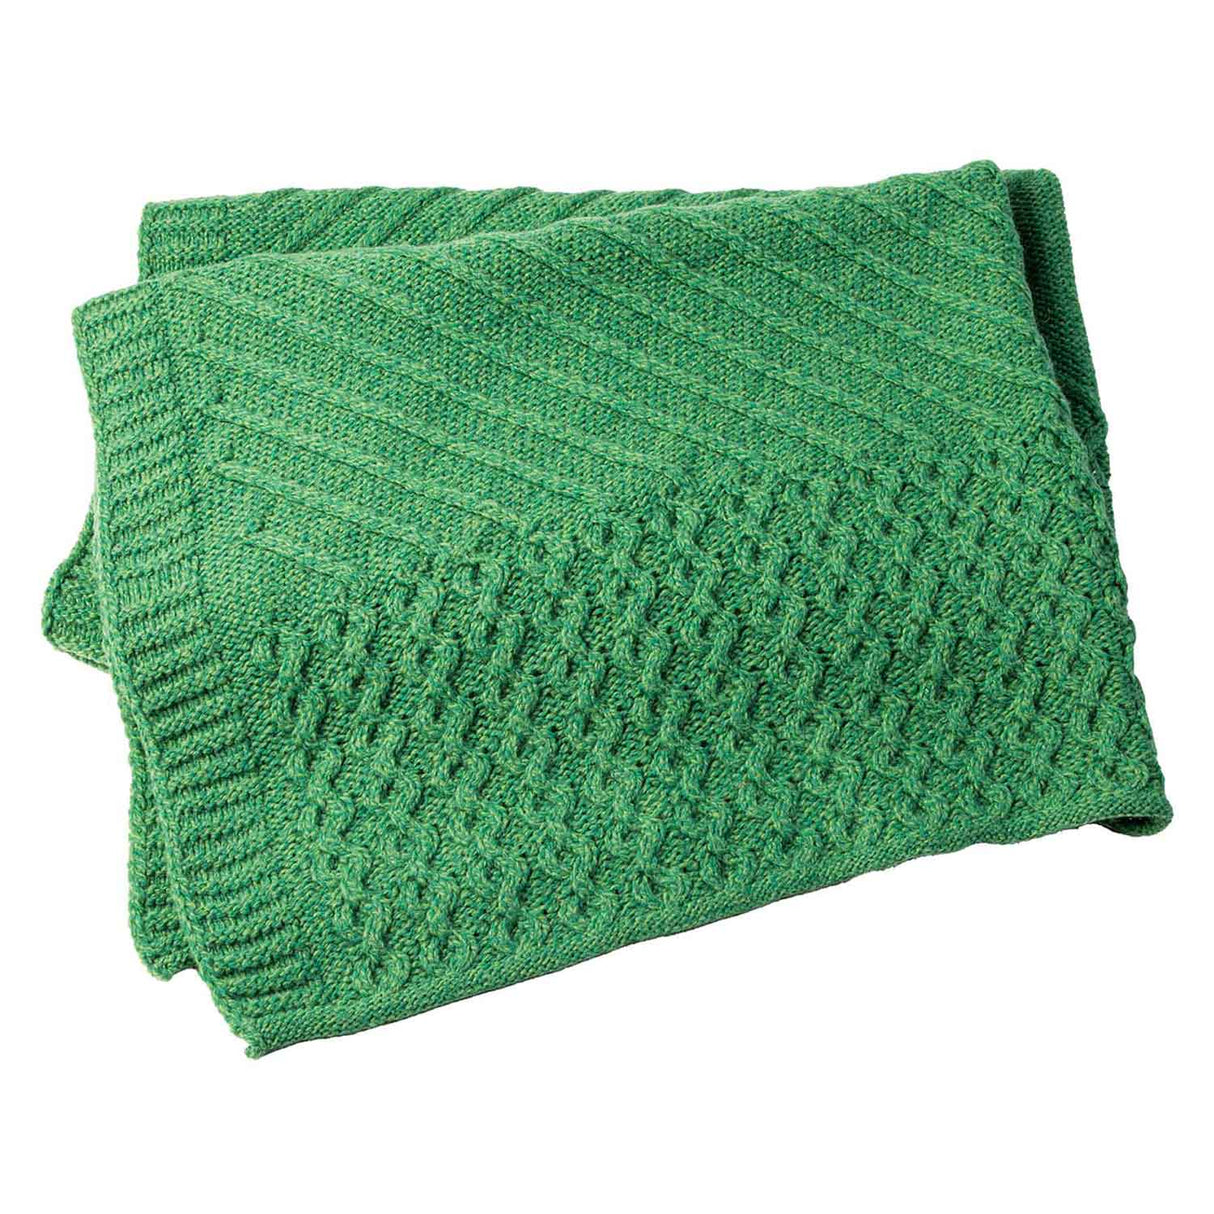 Irish Wool Throw with Shamrock Design, Green - Creative Irish Gifts